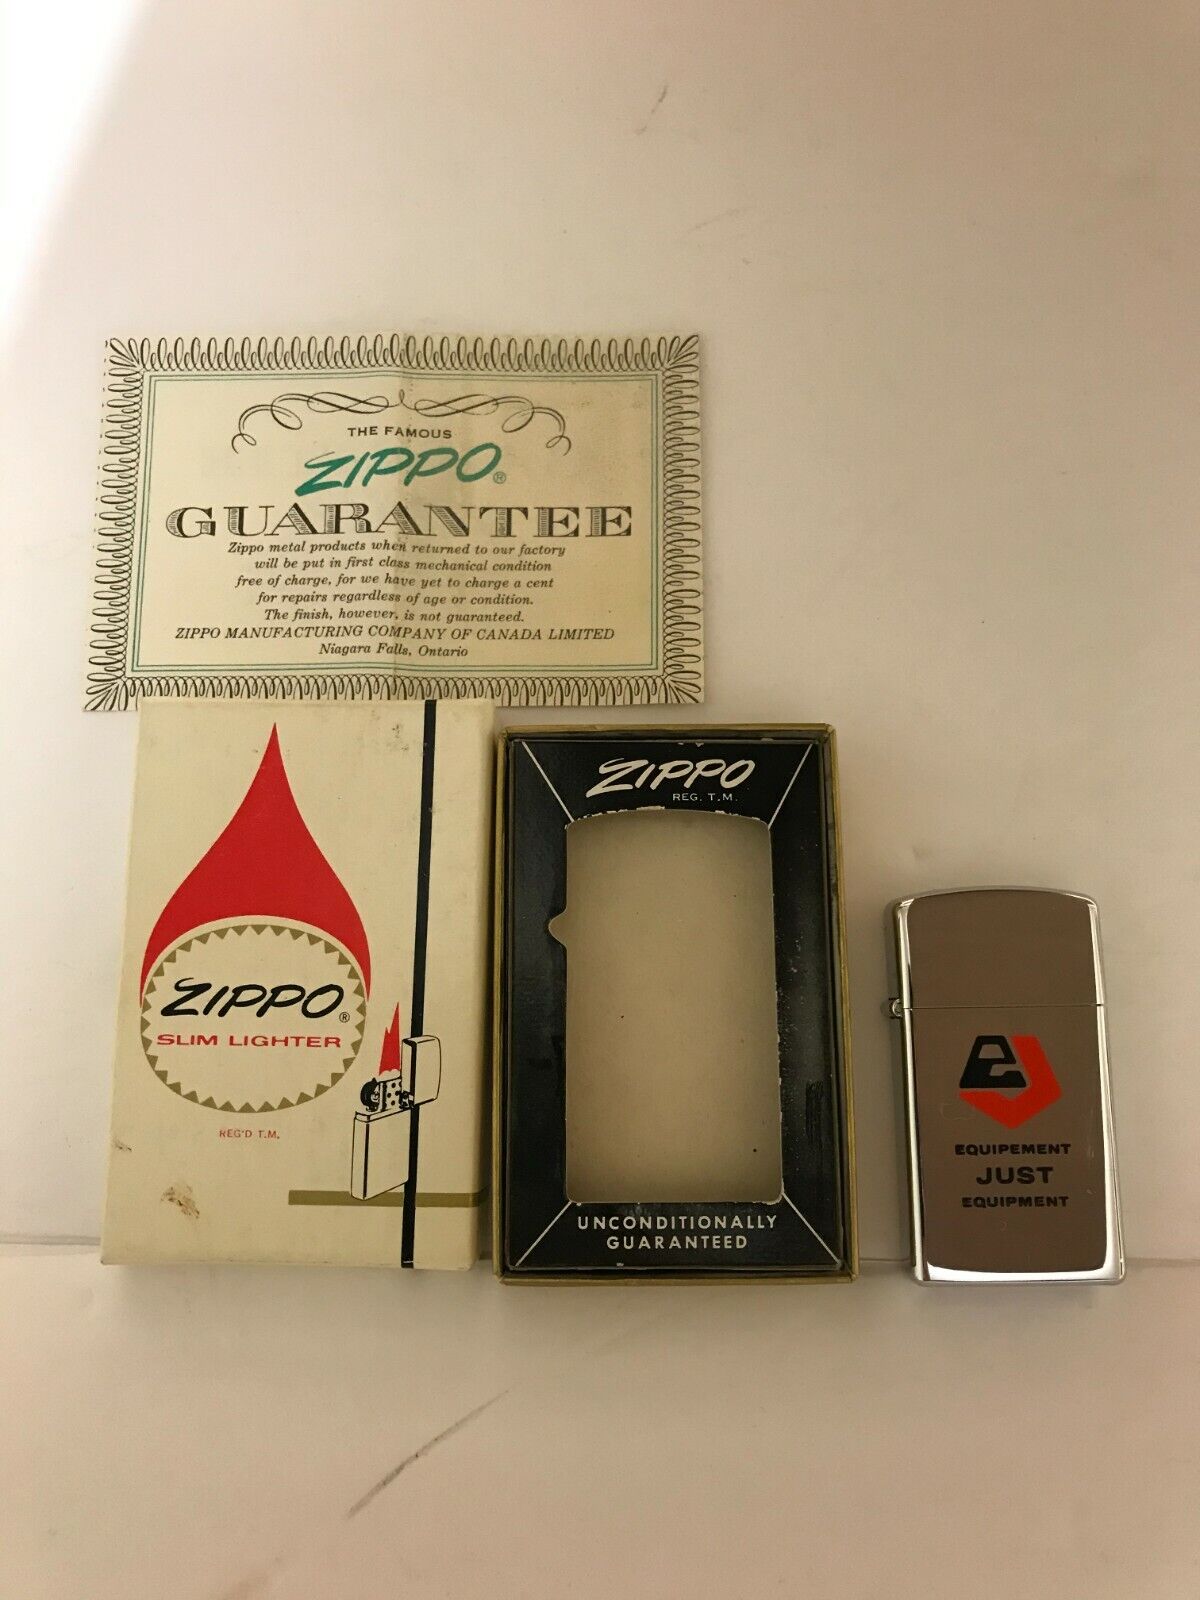 Vintage Rare 1968 Zippo Slim Lighter Equipement Just Equipment In Box Chrome